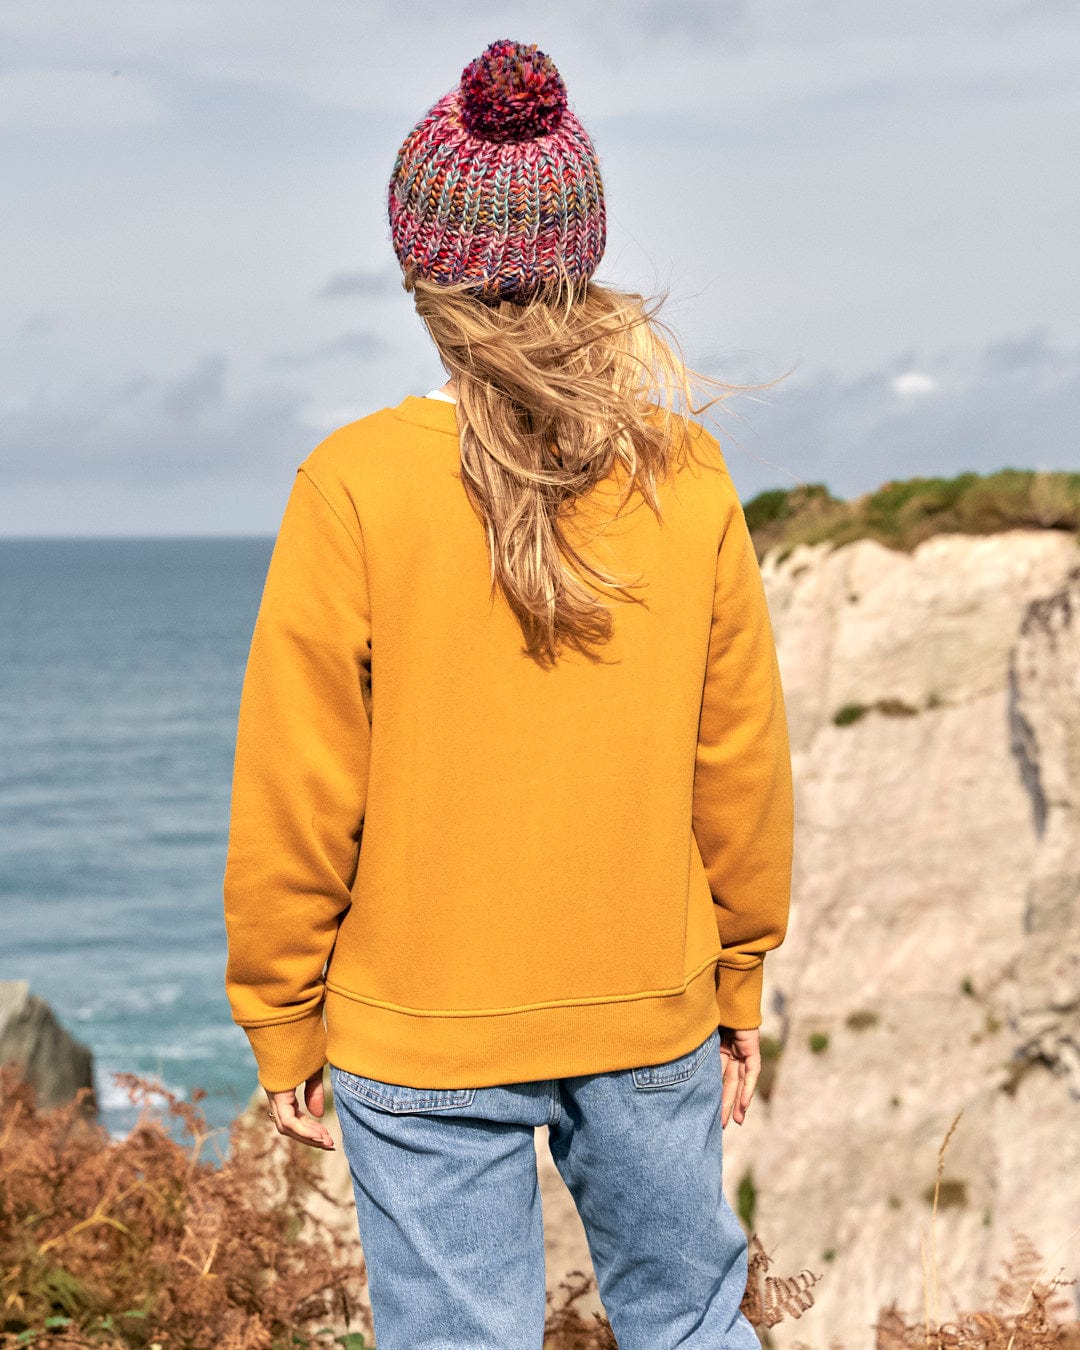 A woman wearing a yellow Saltrock sweatshirt, adorned with Saltrock branding, standing on a cliff overlooking the ocean.